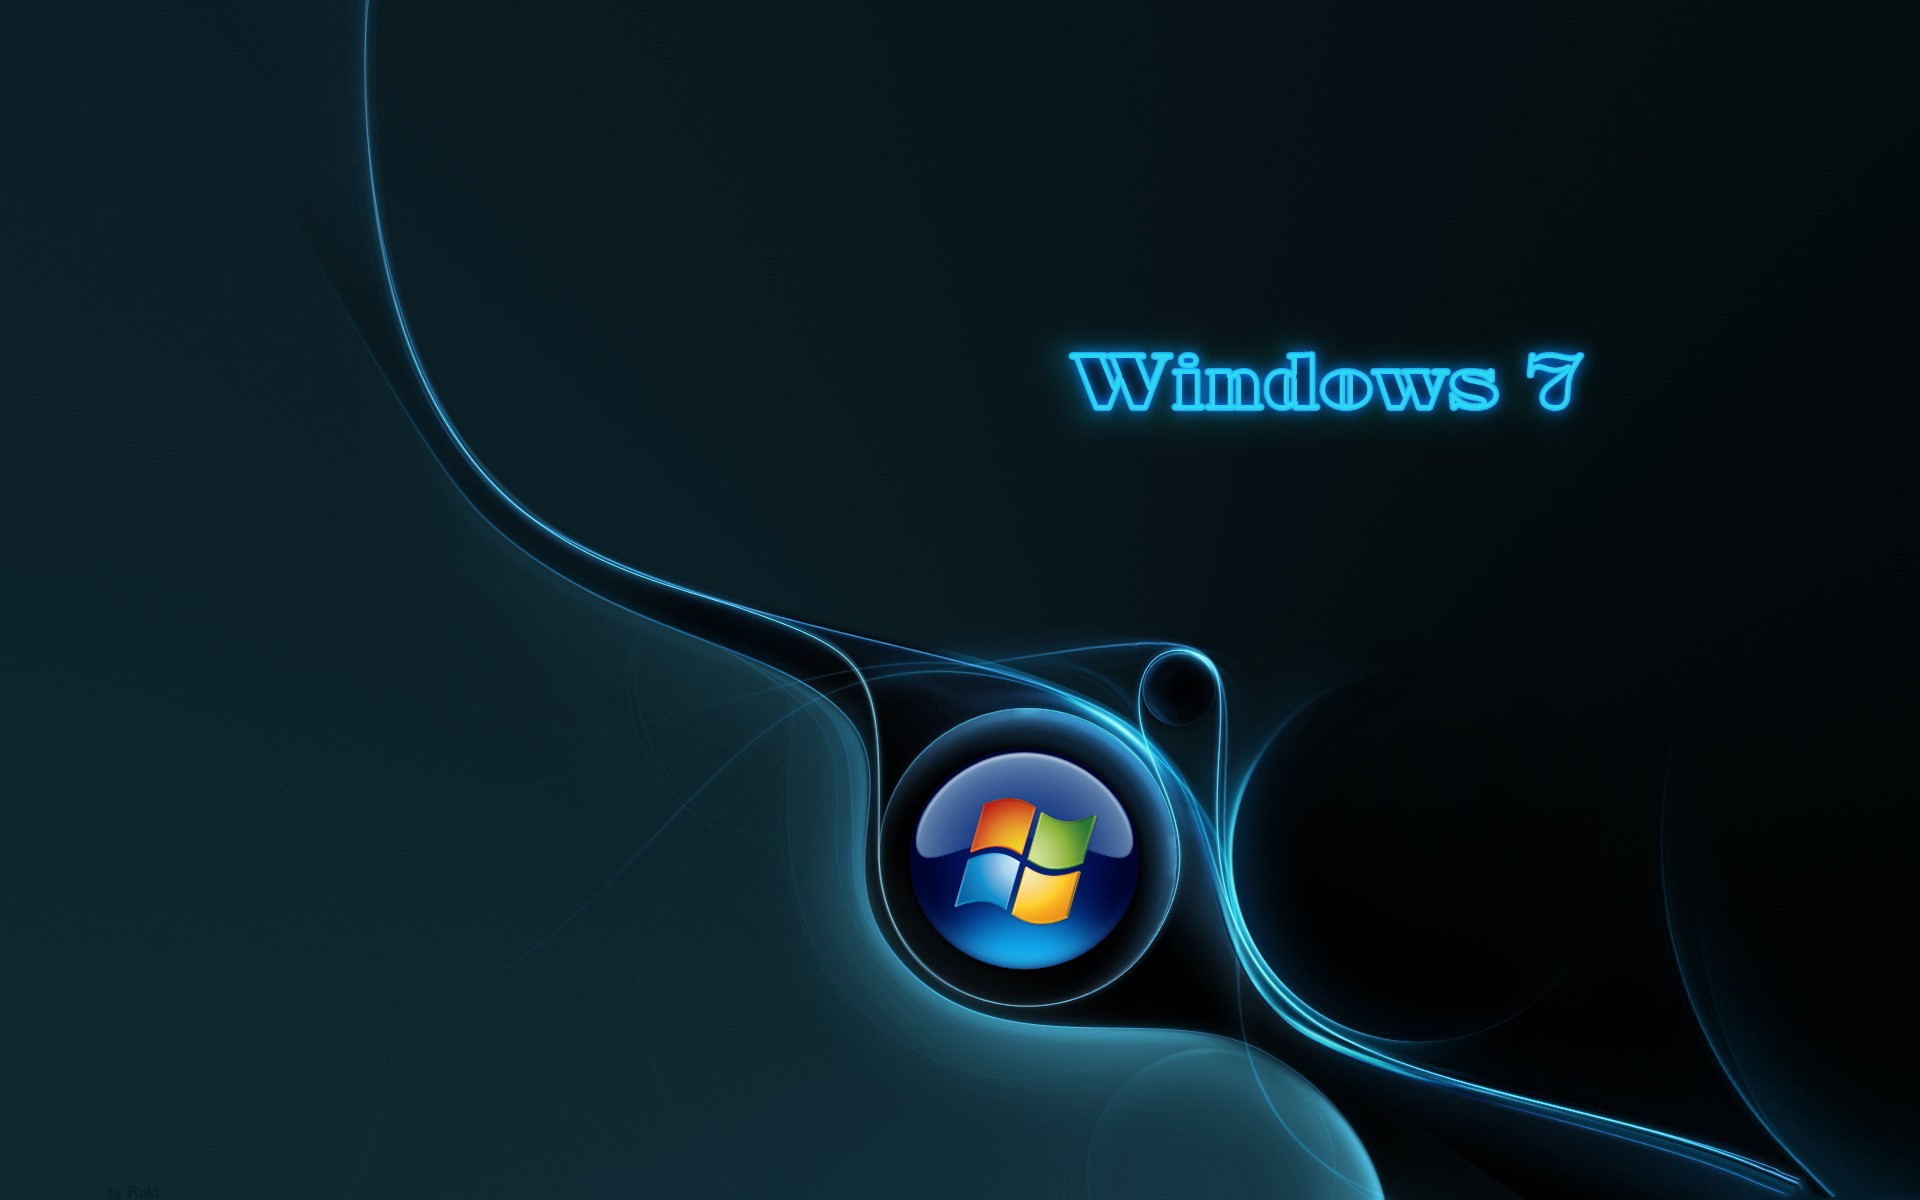 technology, windows 7, windows